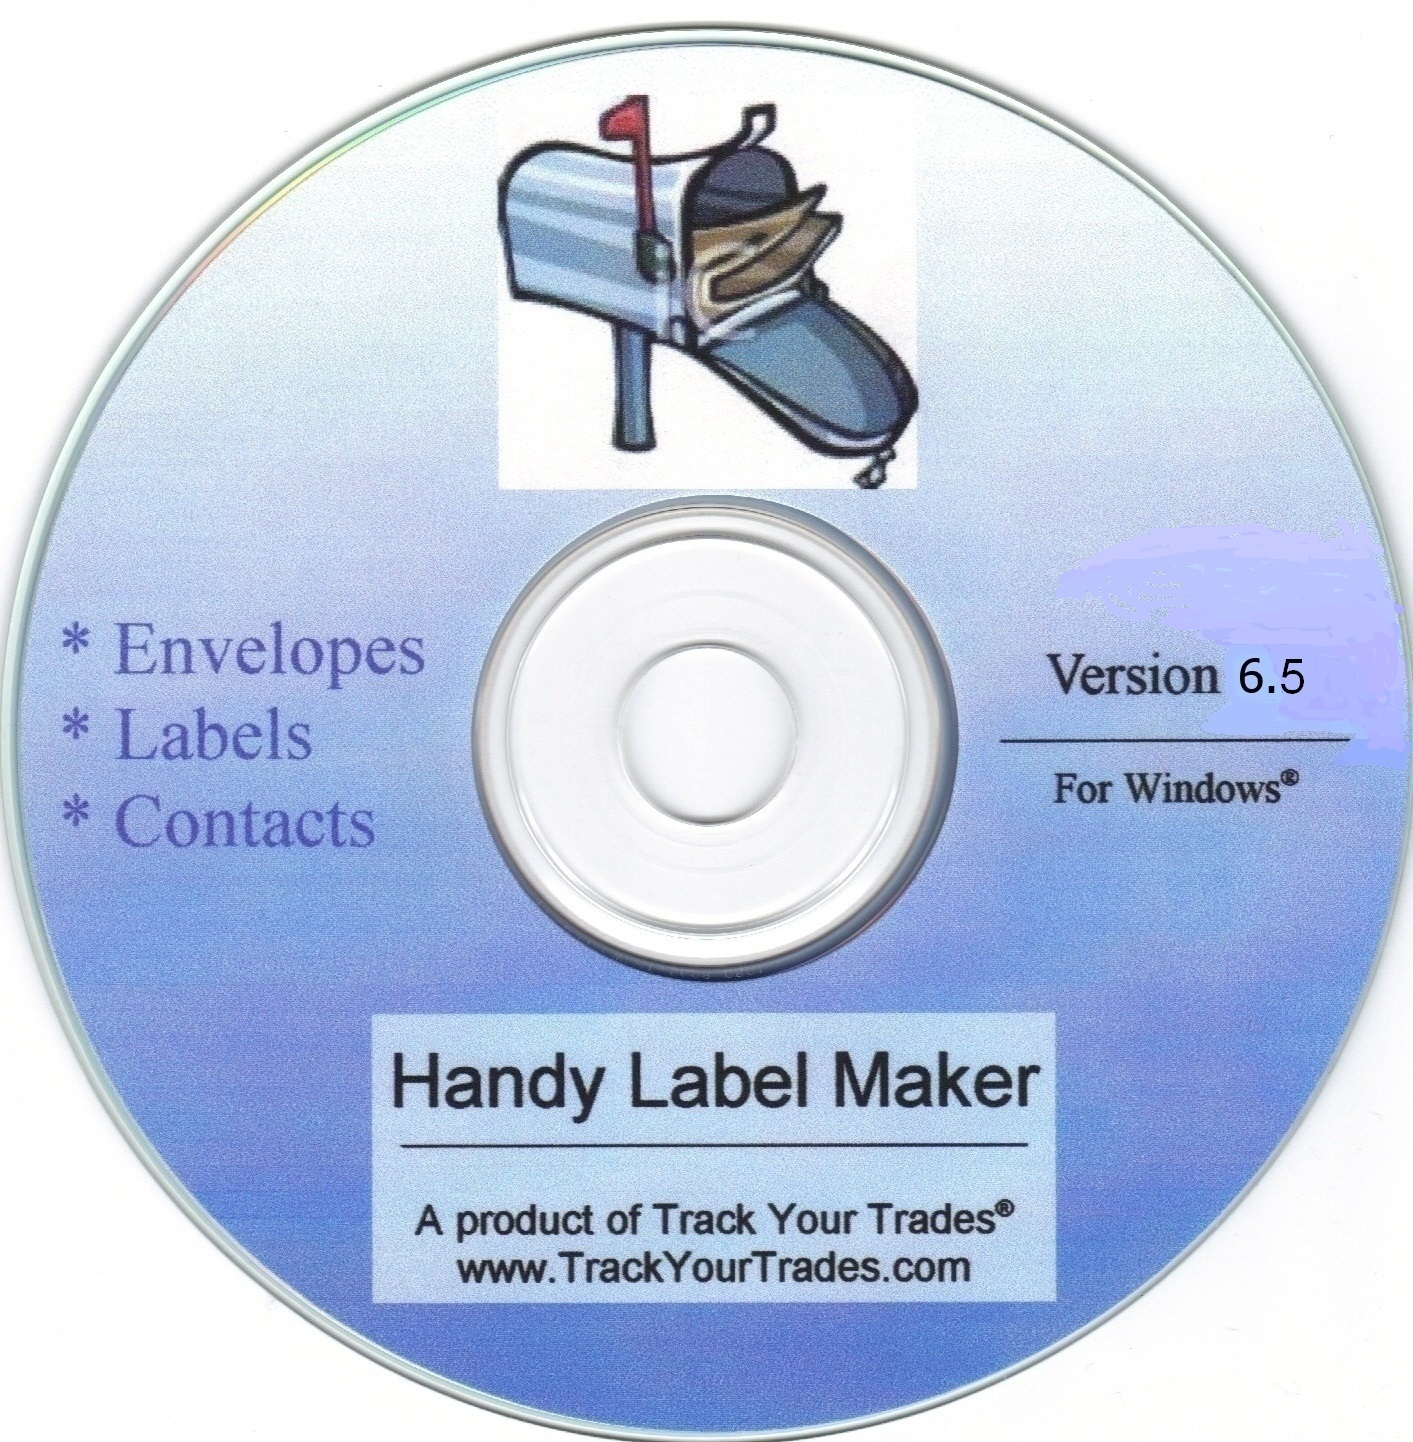 Handy Label Maker